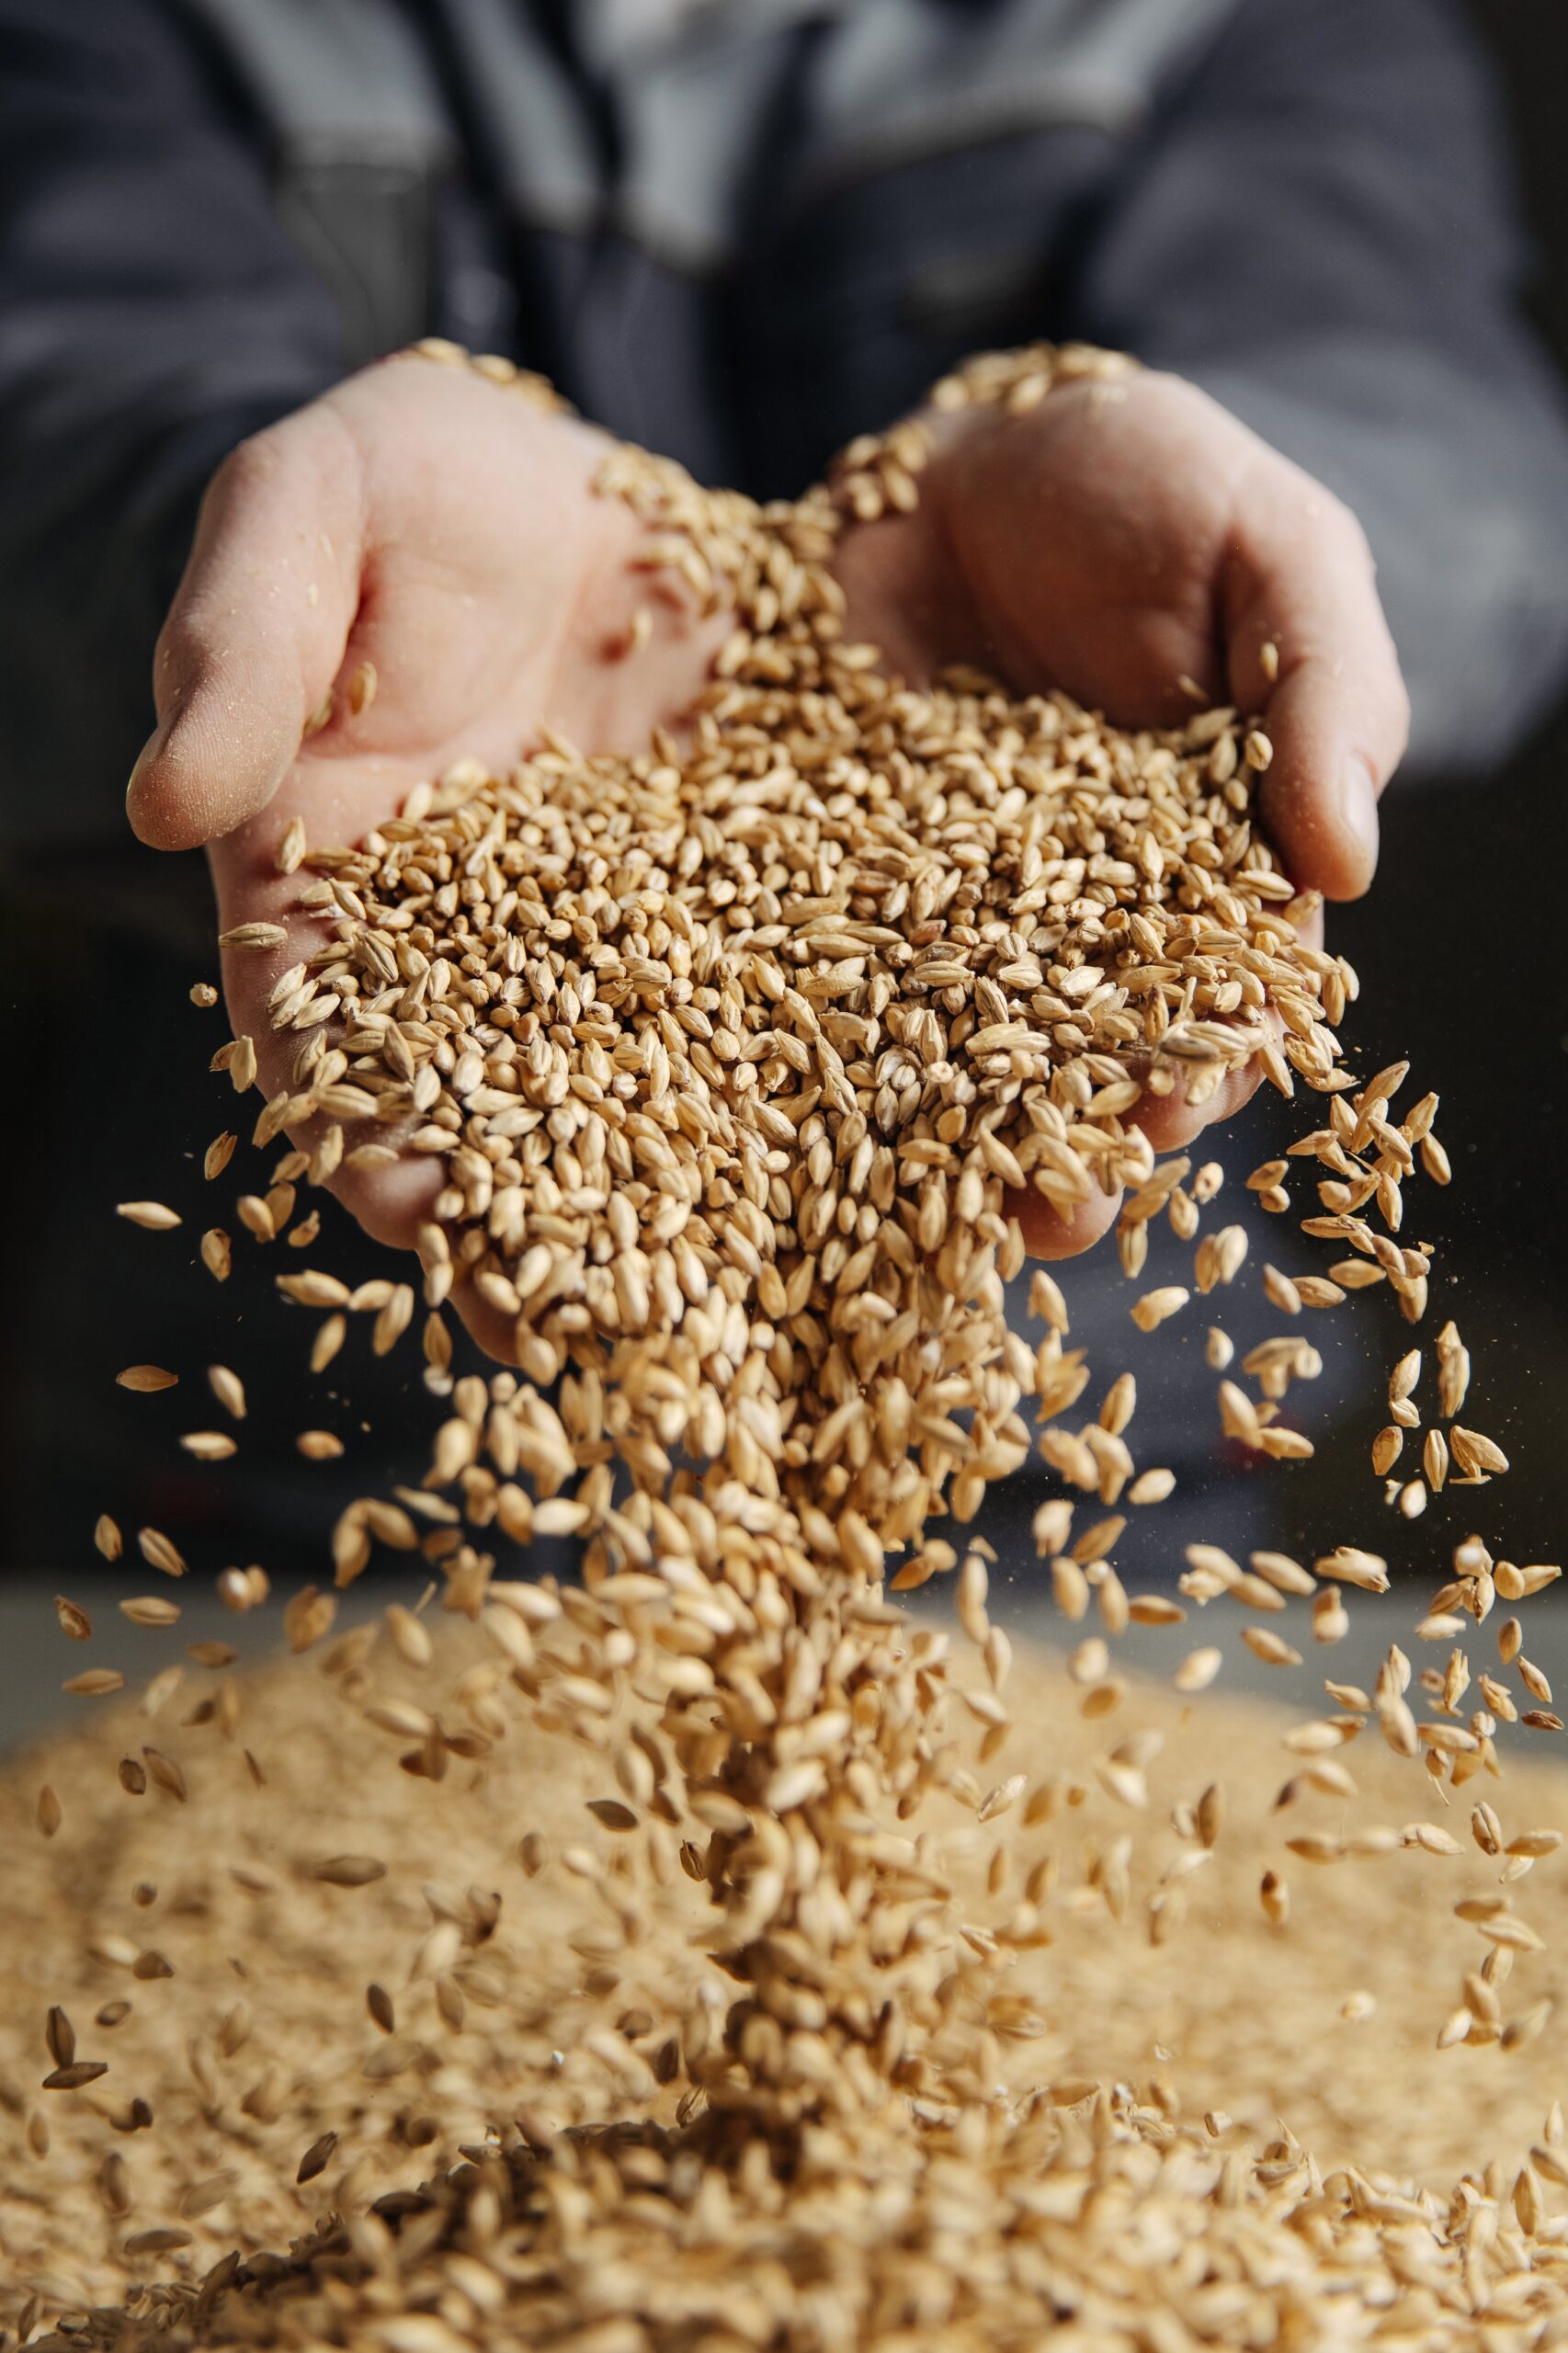 Image of holding grains of malt in hands.